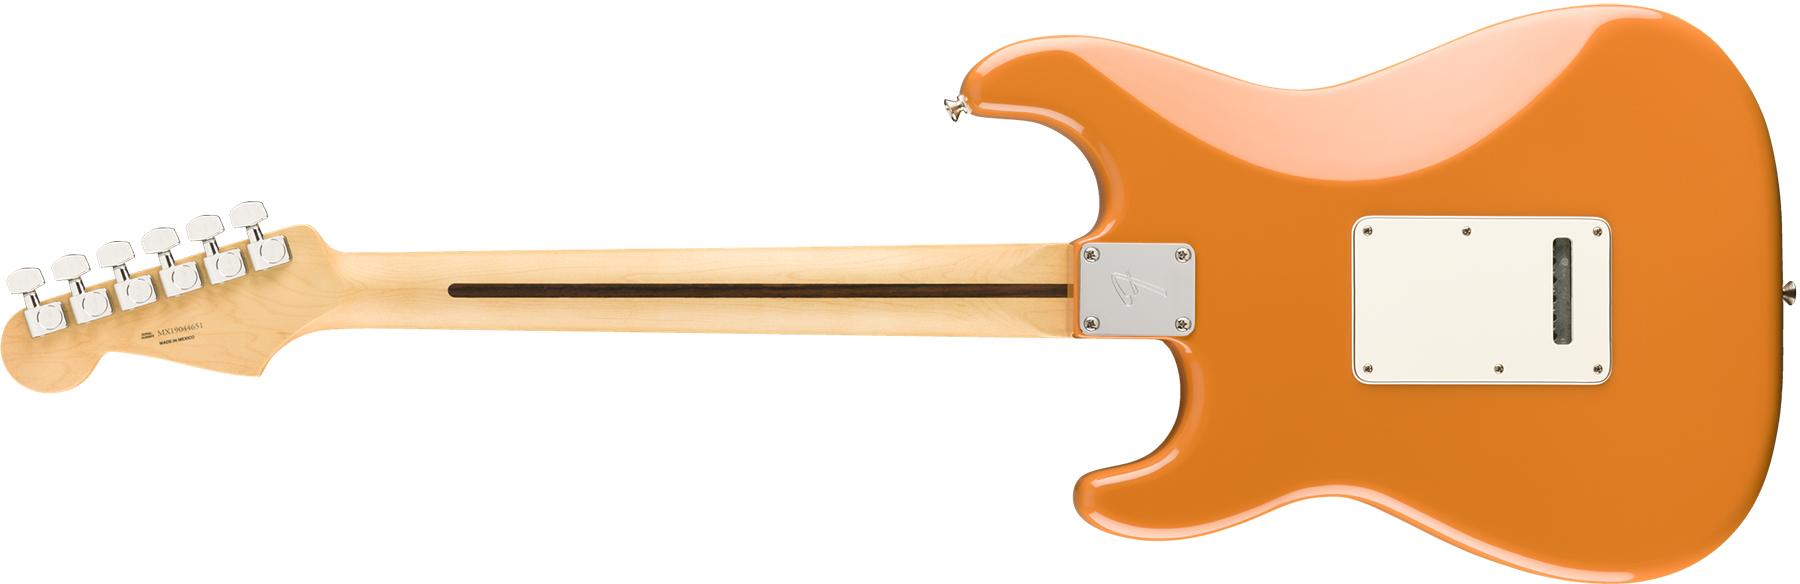 Fender Strat Player Mex Sss Mn - Capri Orange - Str shape electric guitar - Variation 1